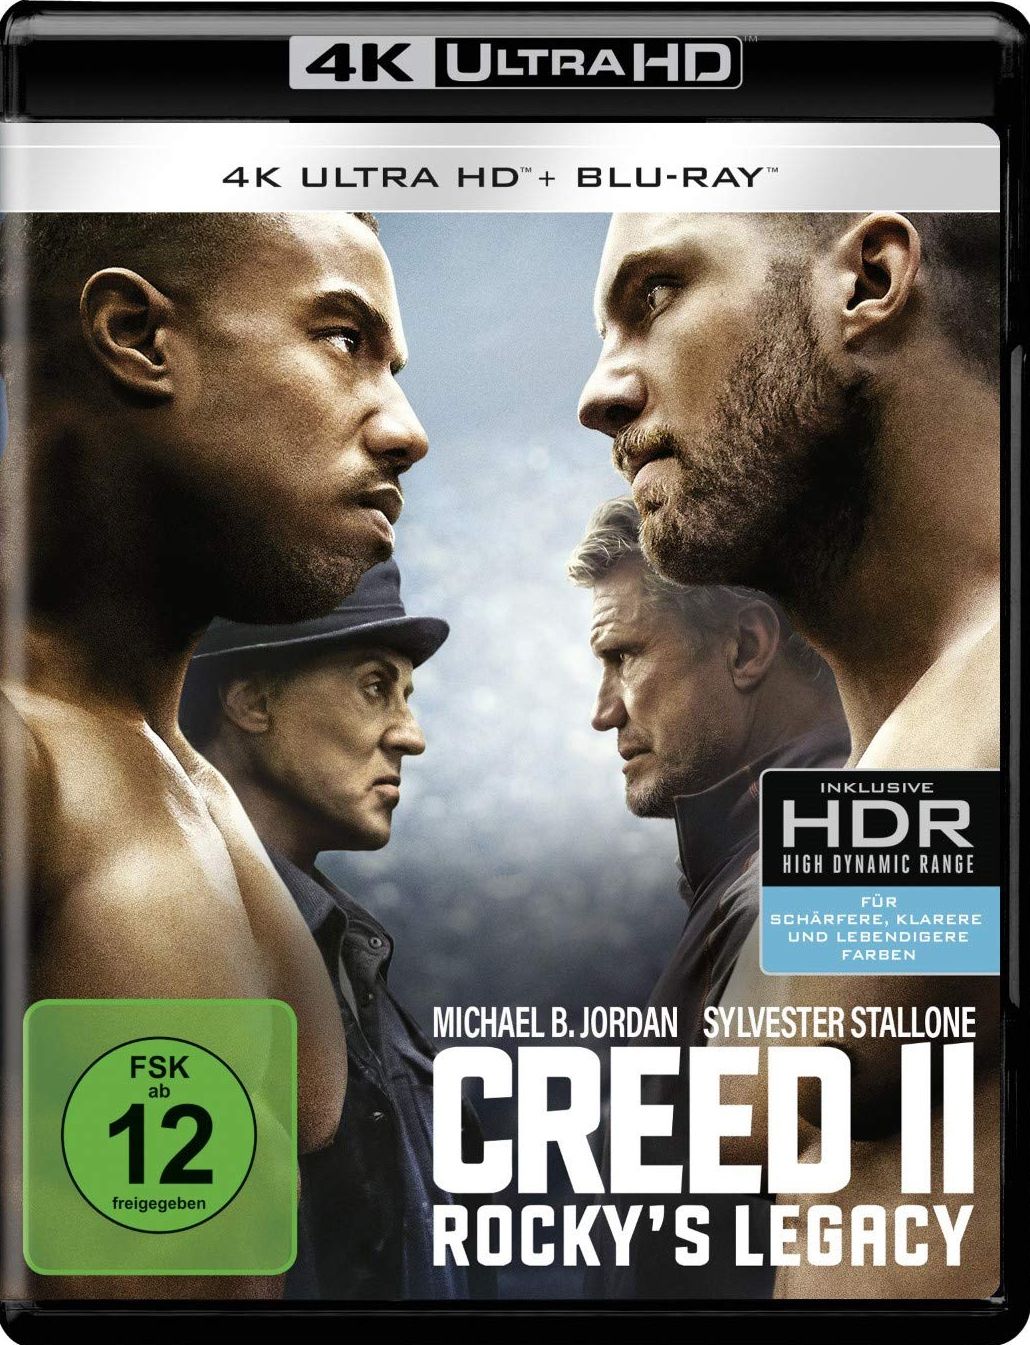 Creed II - Rocky's Legacy (2 Discs) (UHD BLURAY + BLURAY)